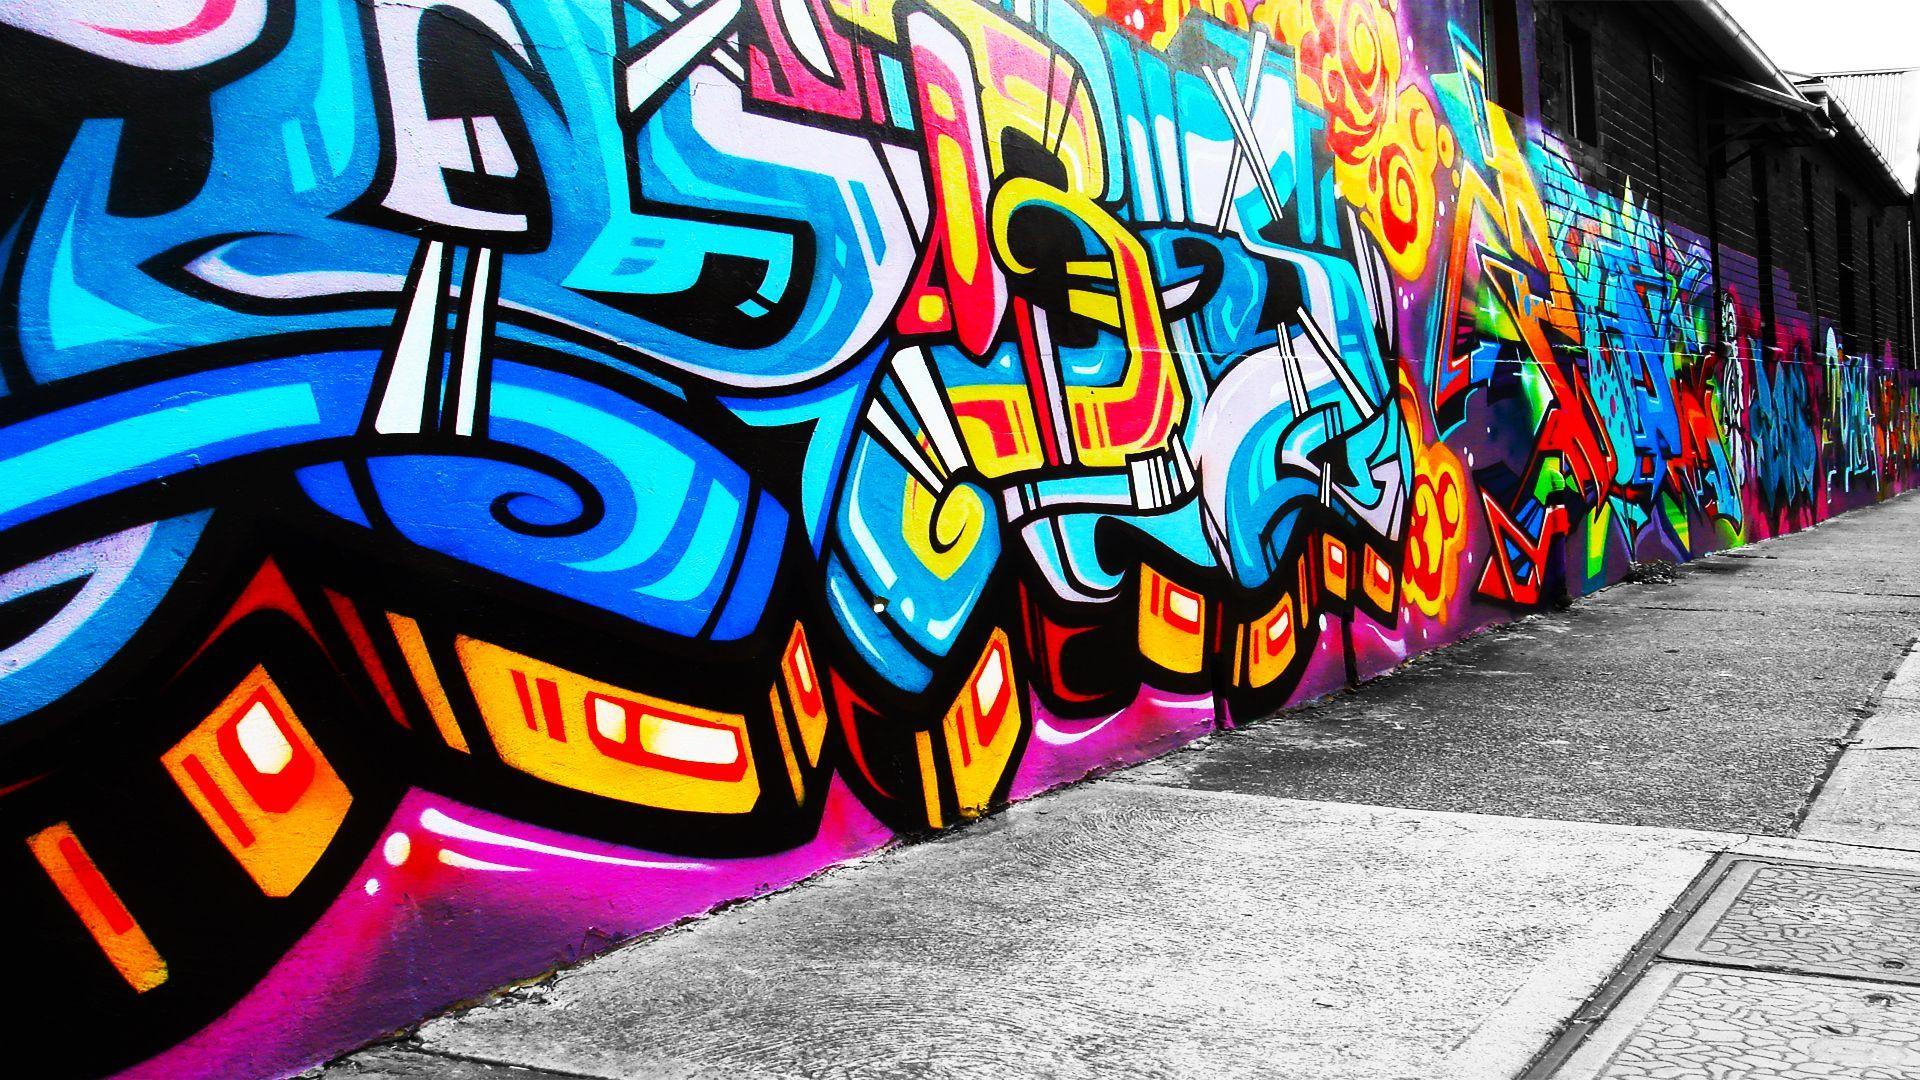 Cool Graffiti Art Wallpaper Free Download. Graffiti, Graffiti art